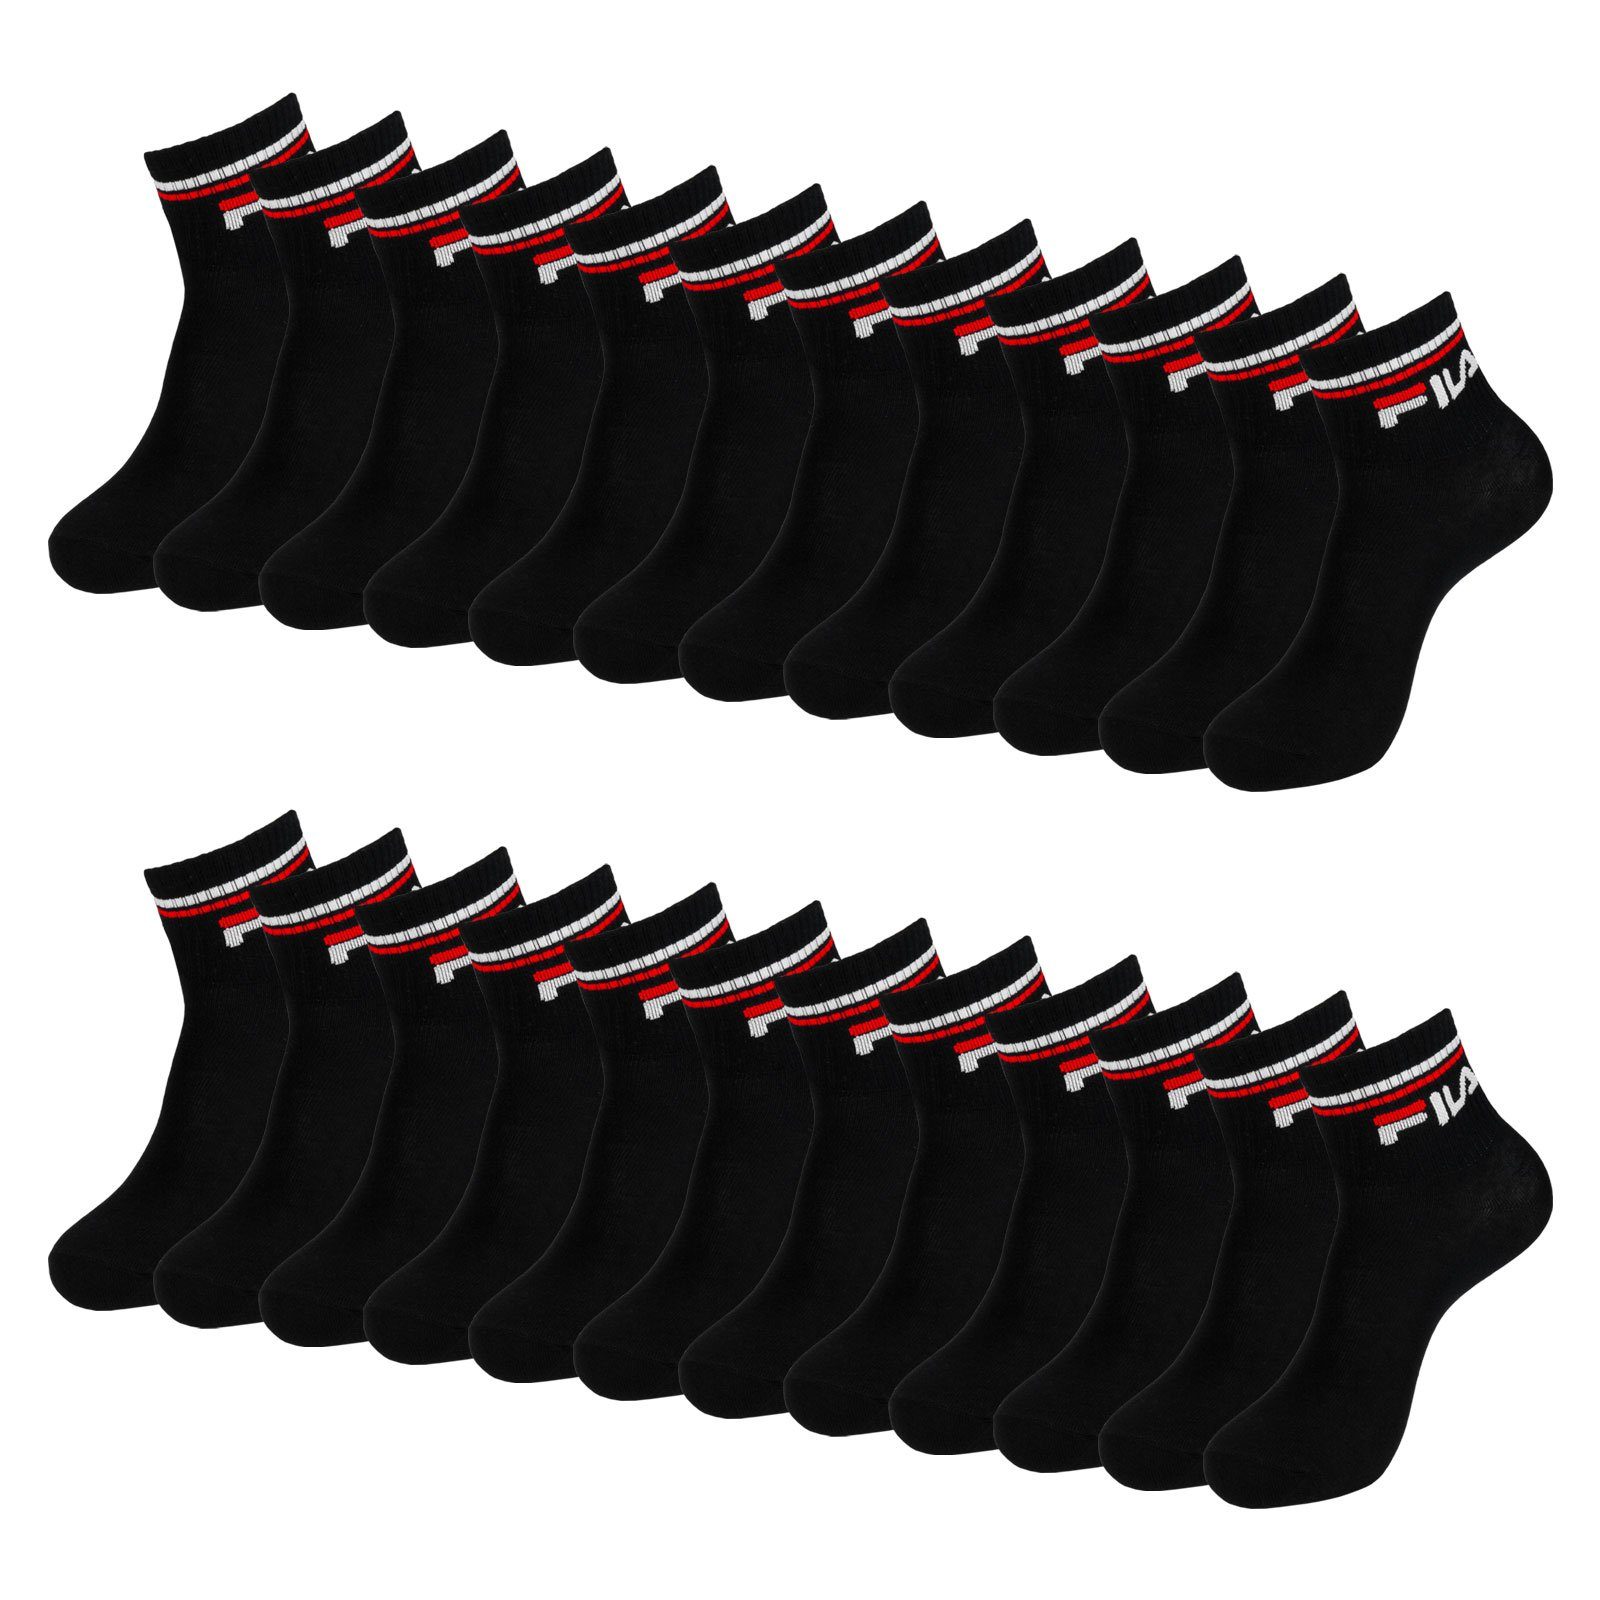 Fila Kurzsocken Quarter Socks Calza (12-Paar) im sportlichen Look mit Rippbündchen 200 black